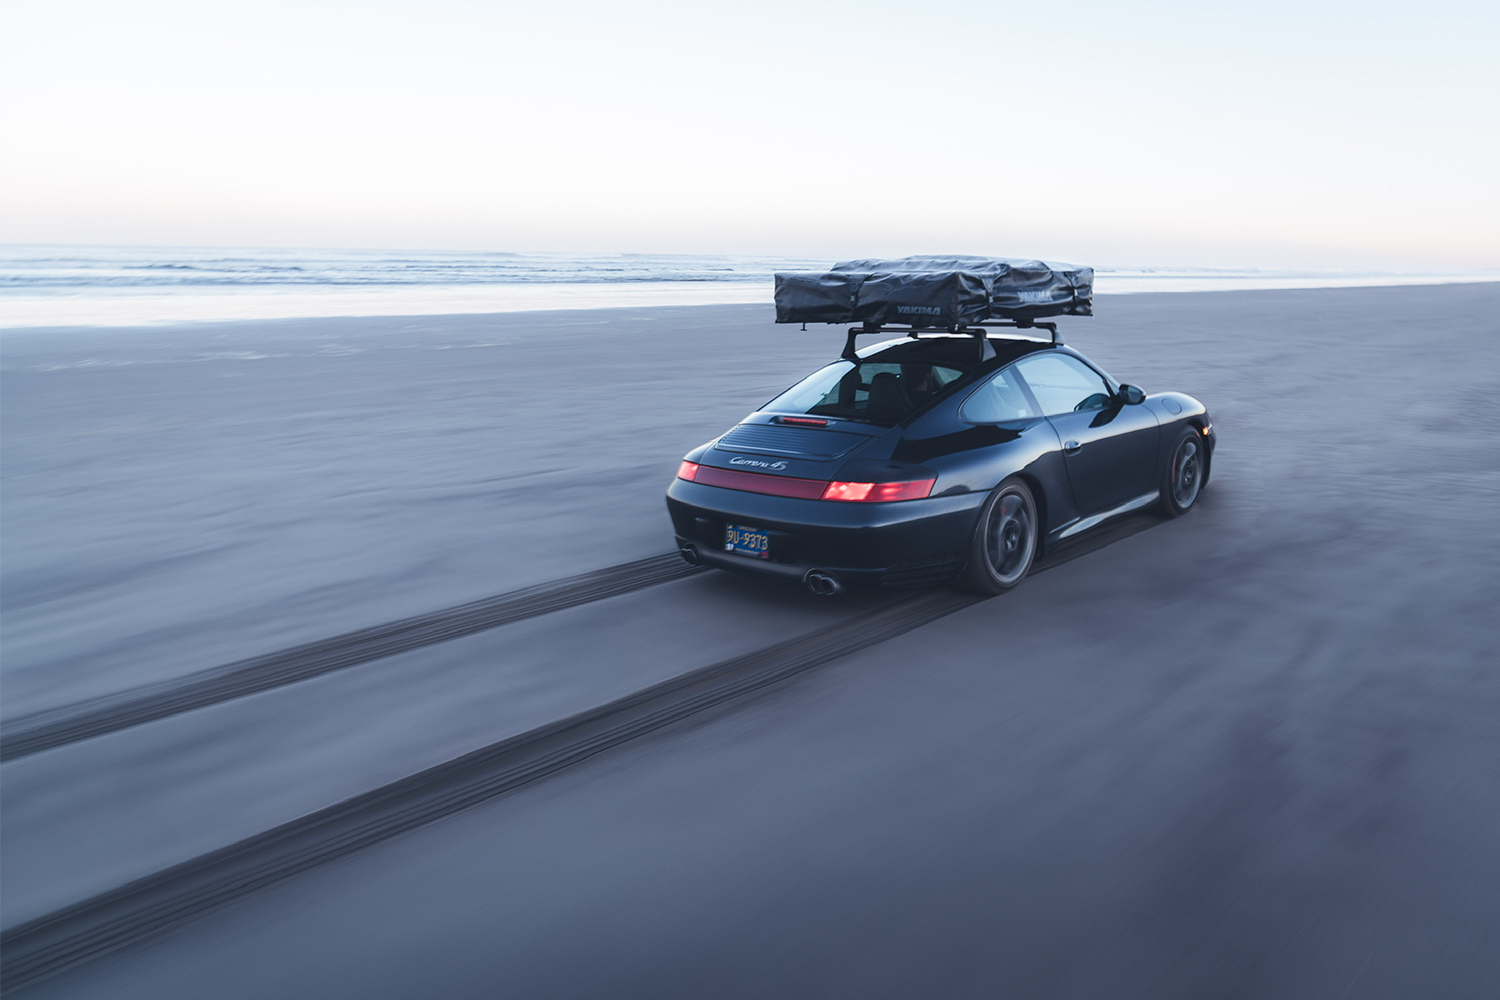 Brock Keen's black Porsche 996 911 with a rooftop tent speeding down the sandy beach next to the ocean